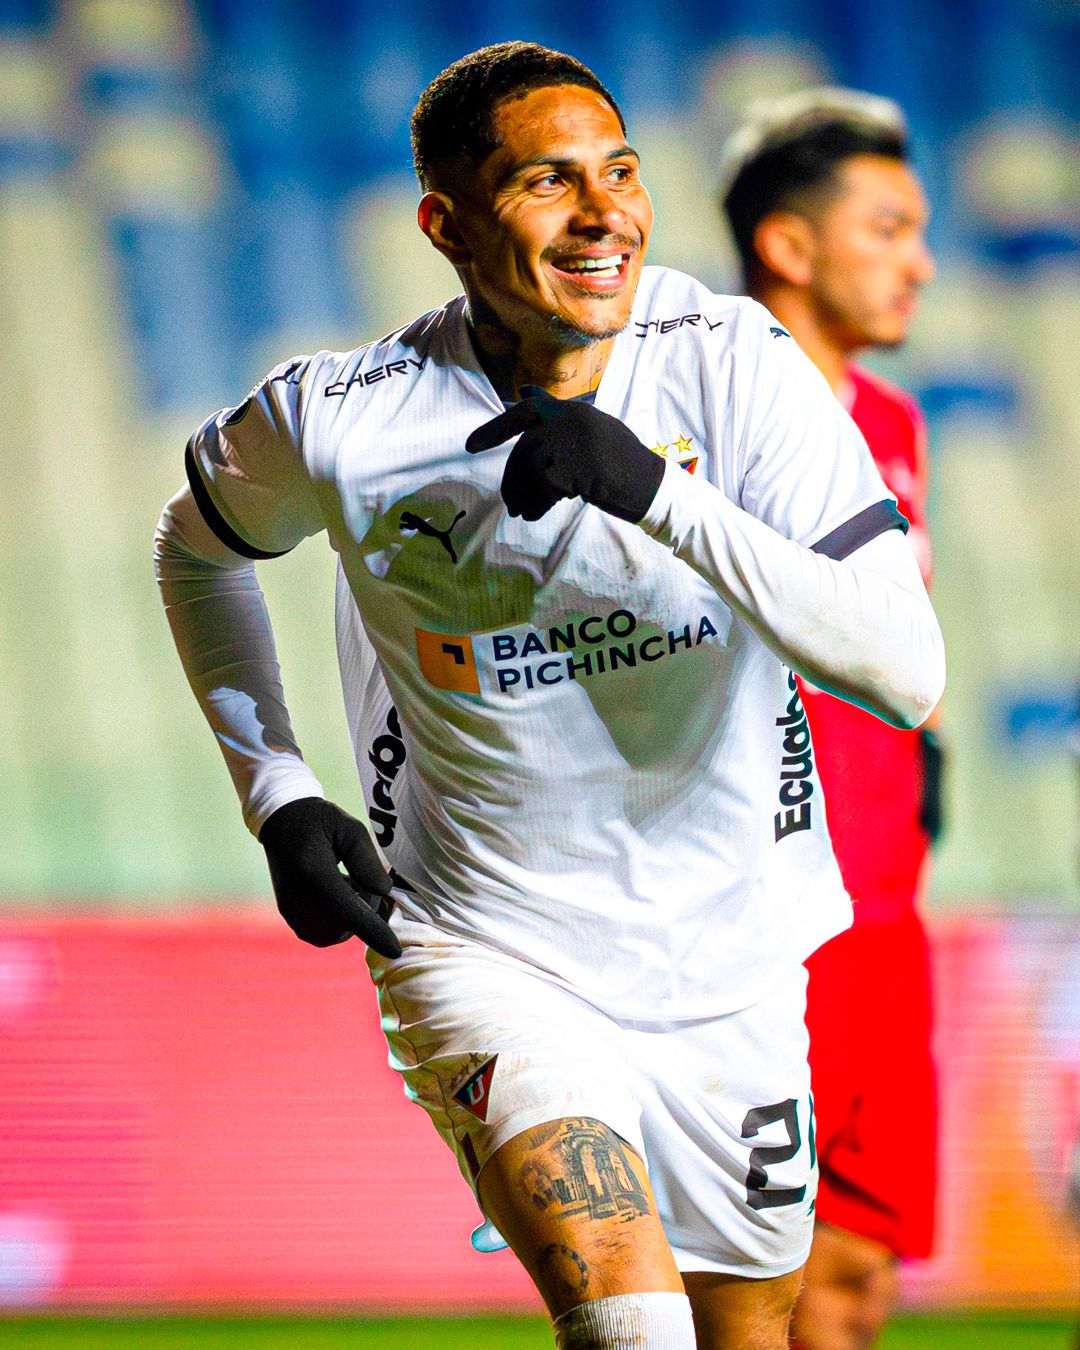 Paolo Guerrero celebrating his goal in LDU vs Ñublense.